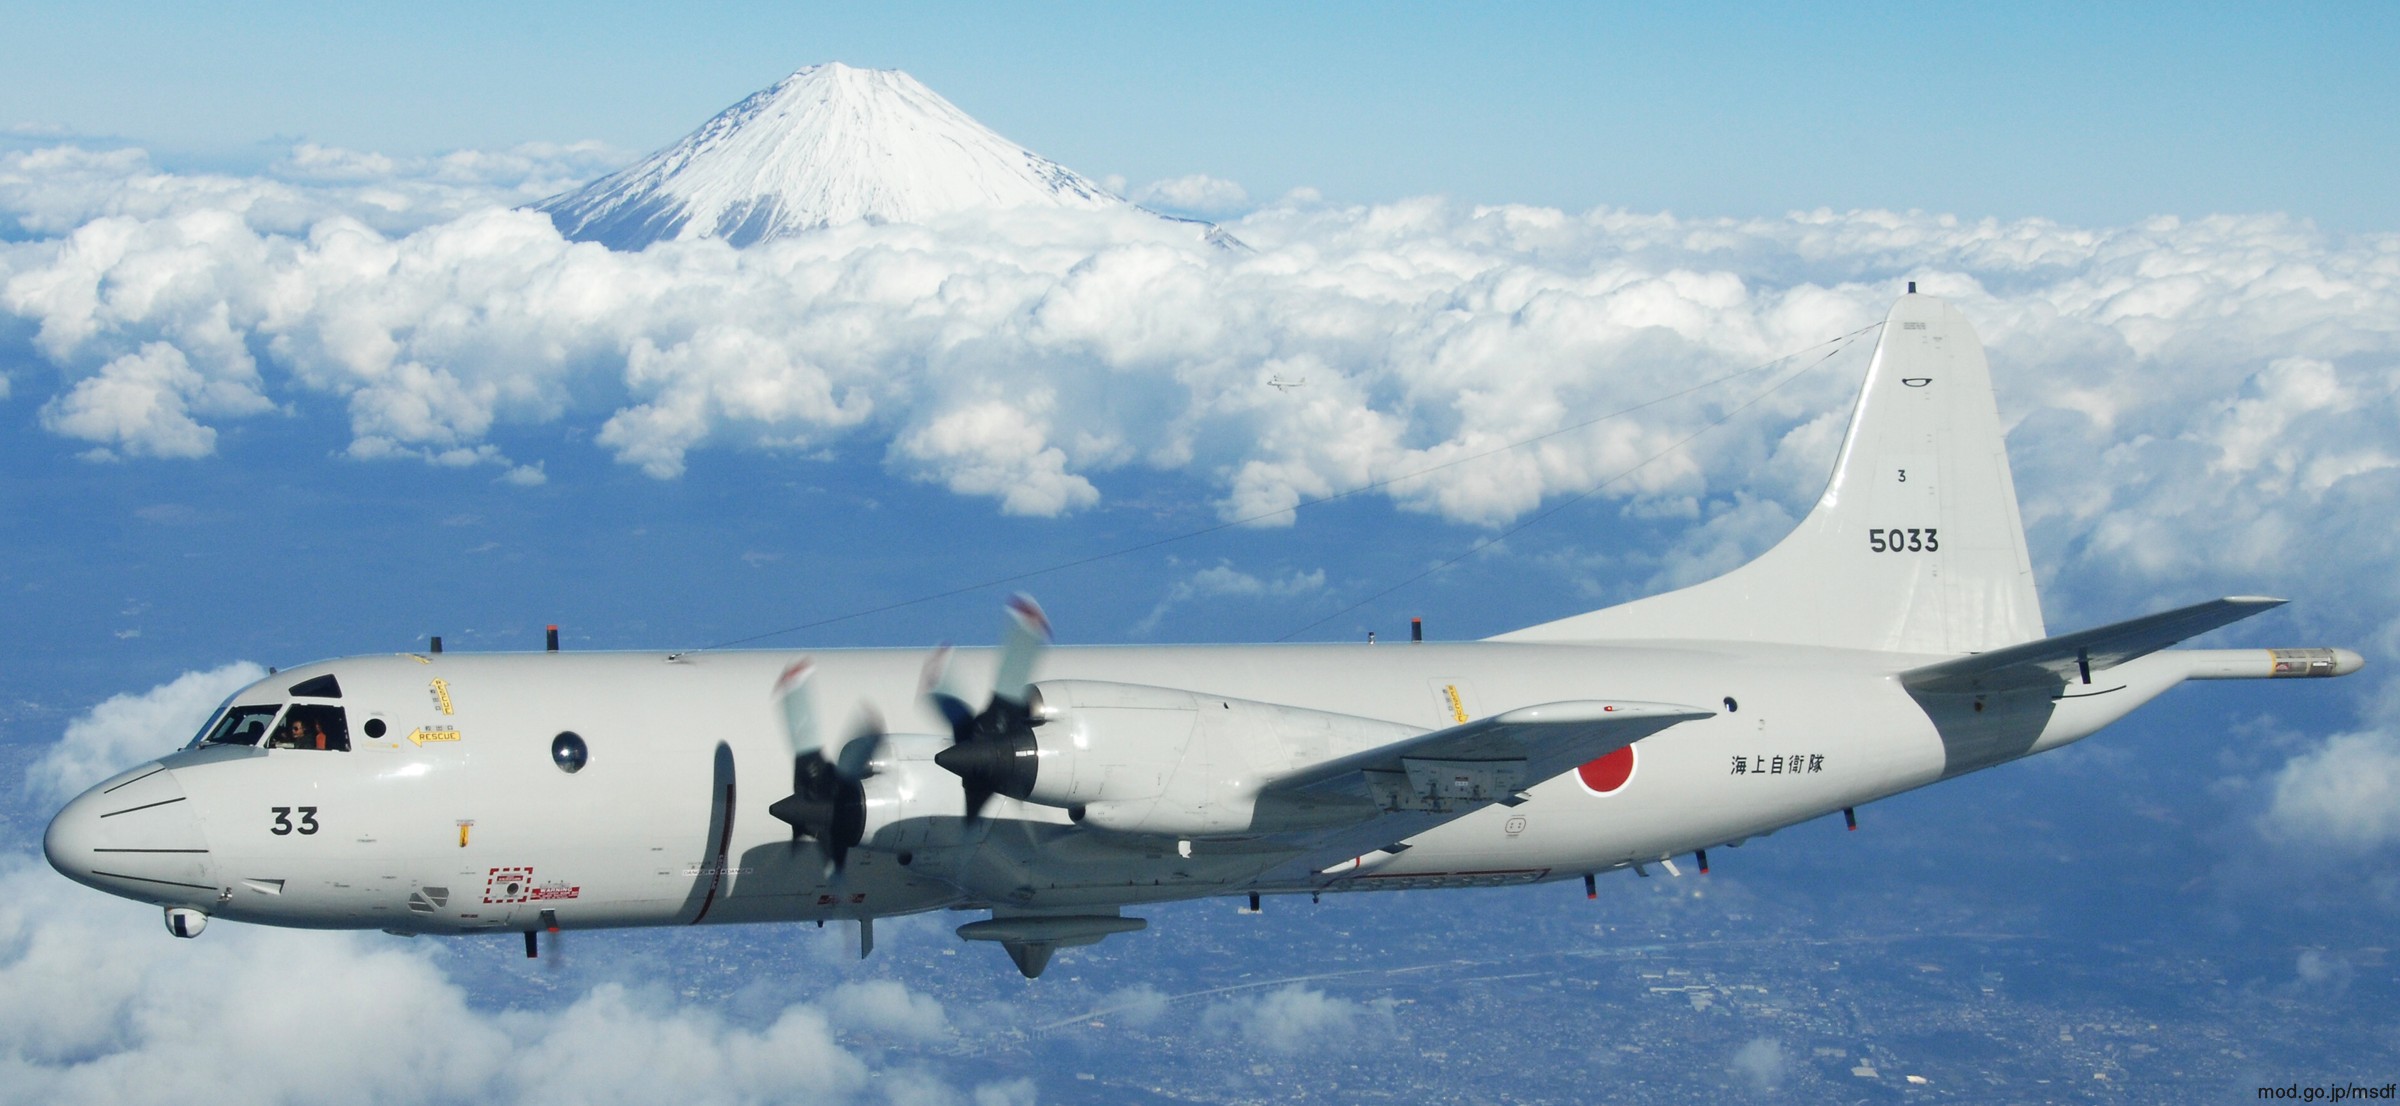 kawasaki p-3c orion patrol aircraft mpa japan maritime self defense force jmsdf 5033 03